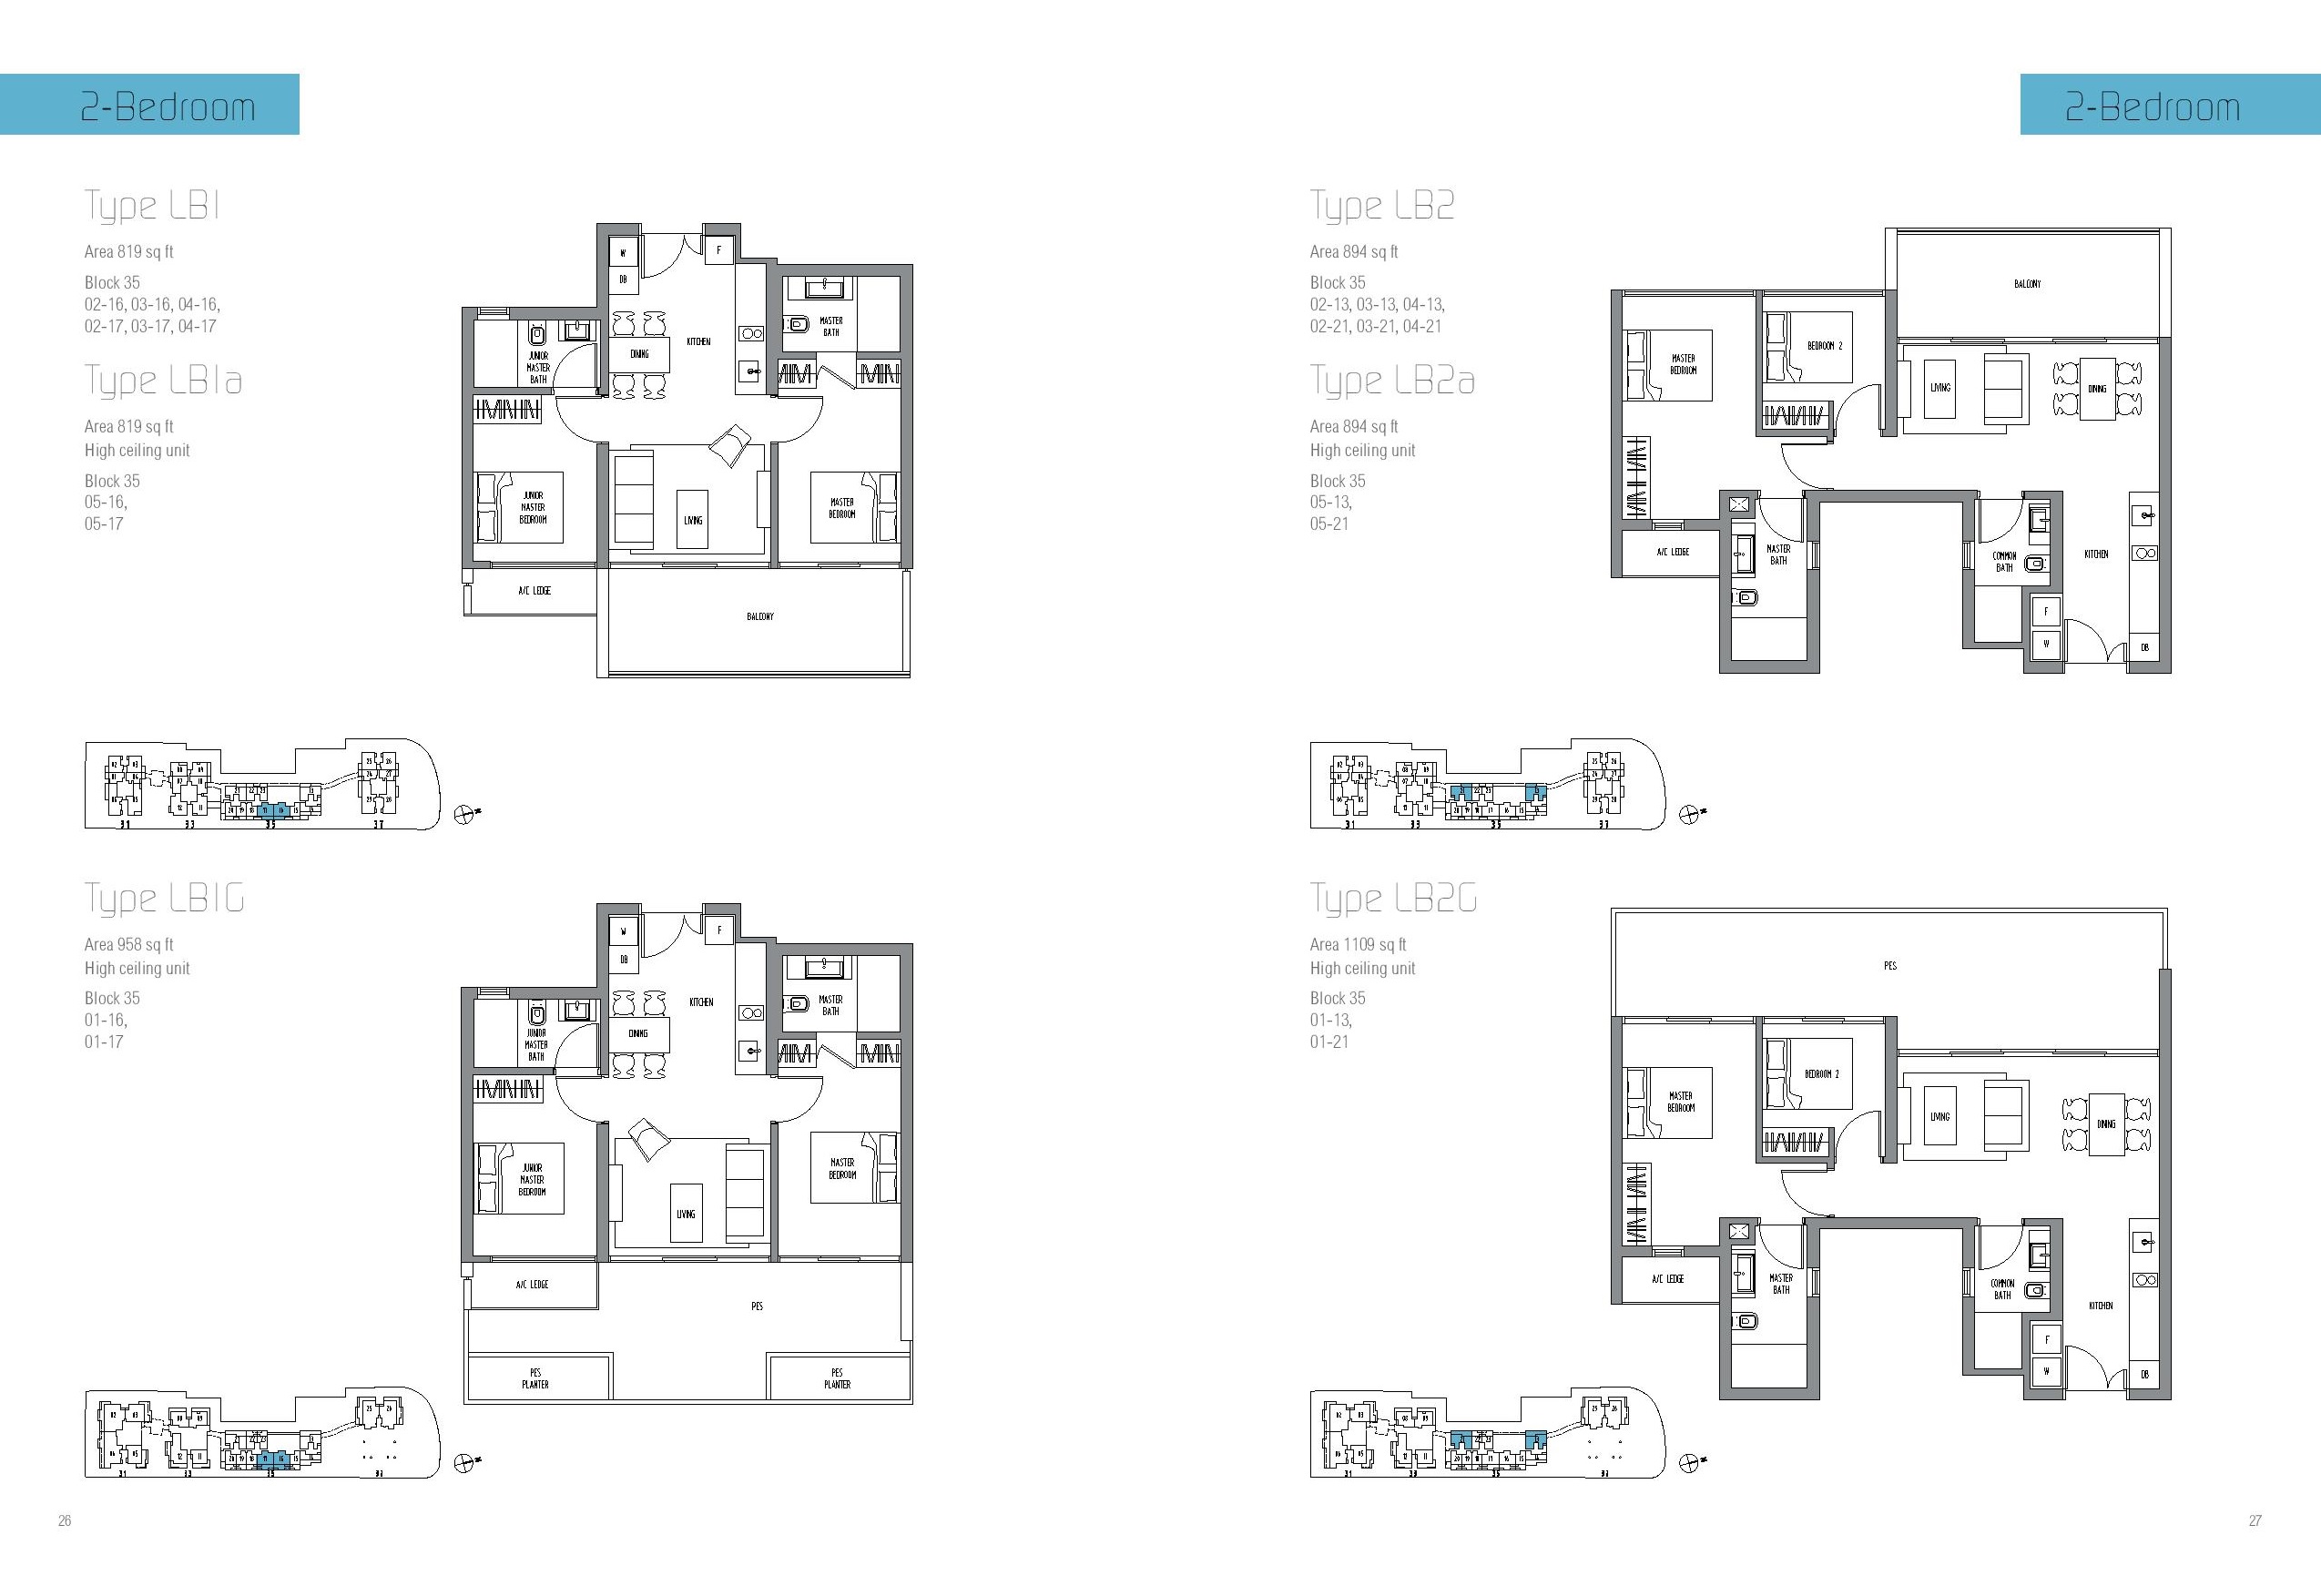 Sennett Residence 2 Bedroom Type LB1, LB1a, LB1G, LB2, LB2a, LB2G Floor Plan